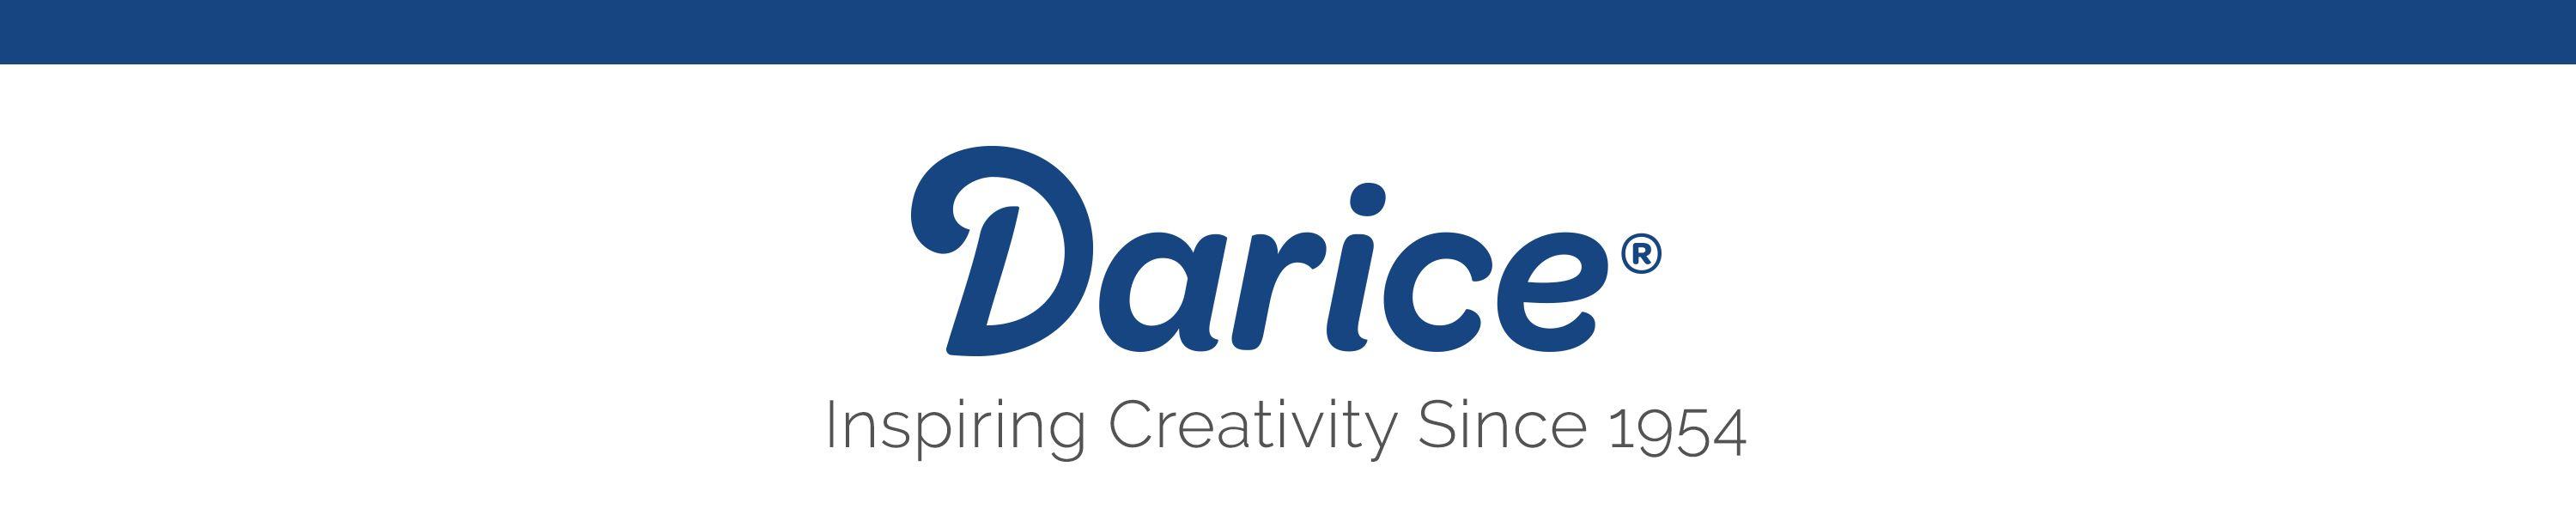 Darice Logo - Darice